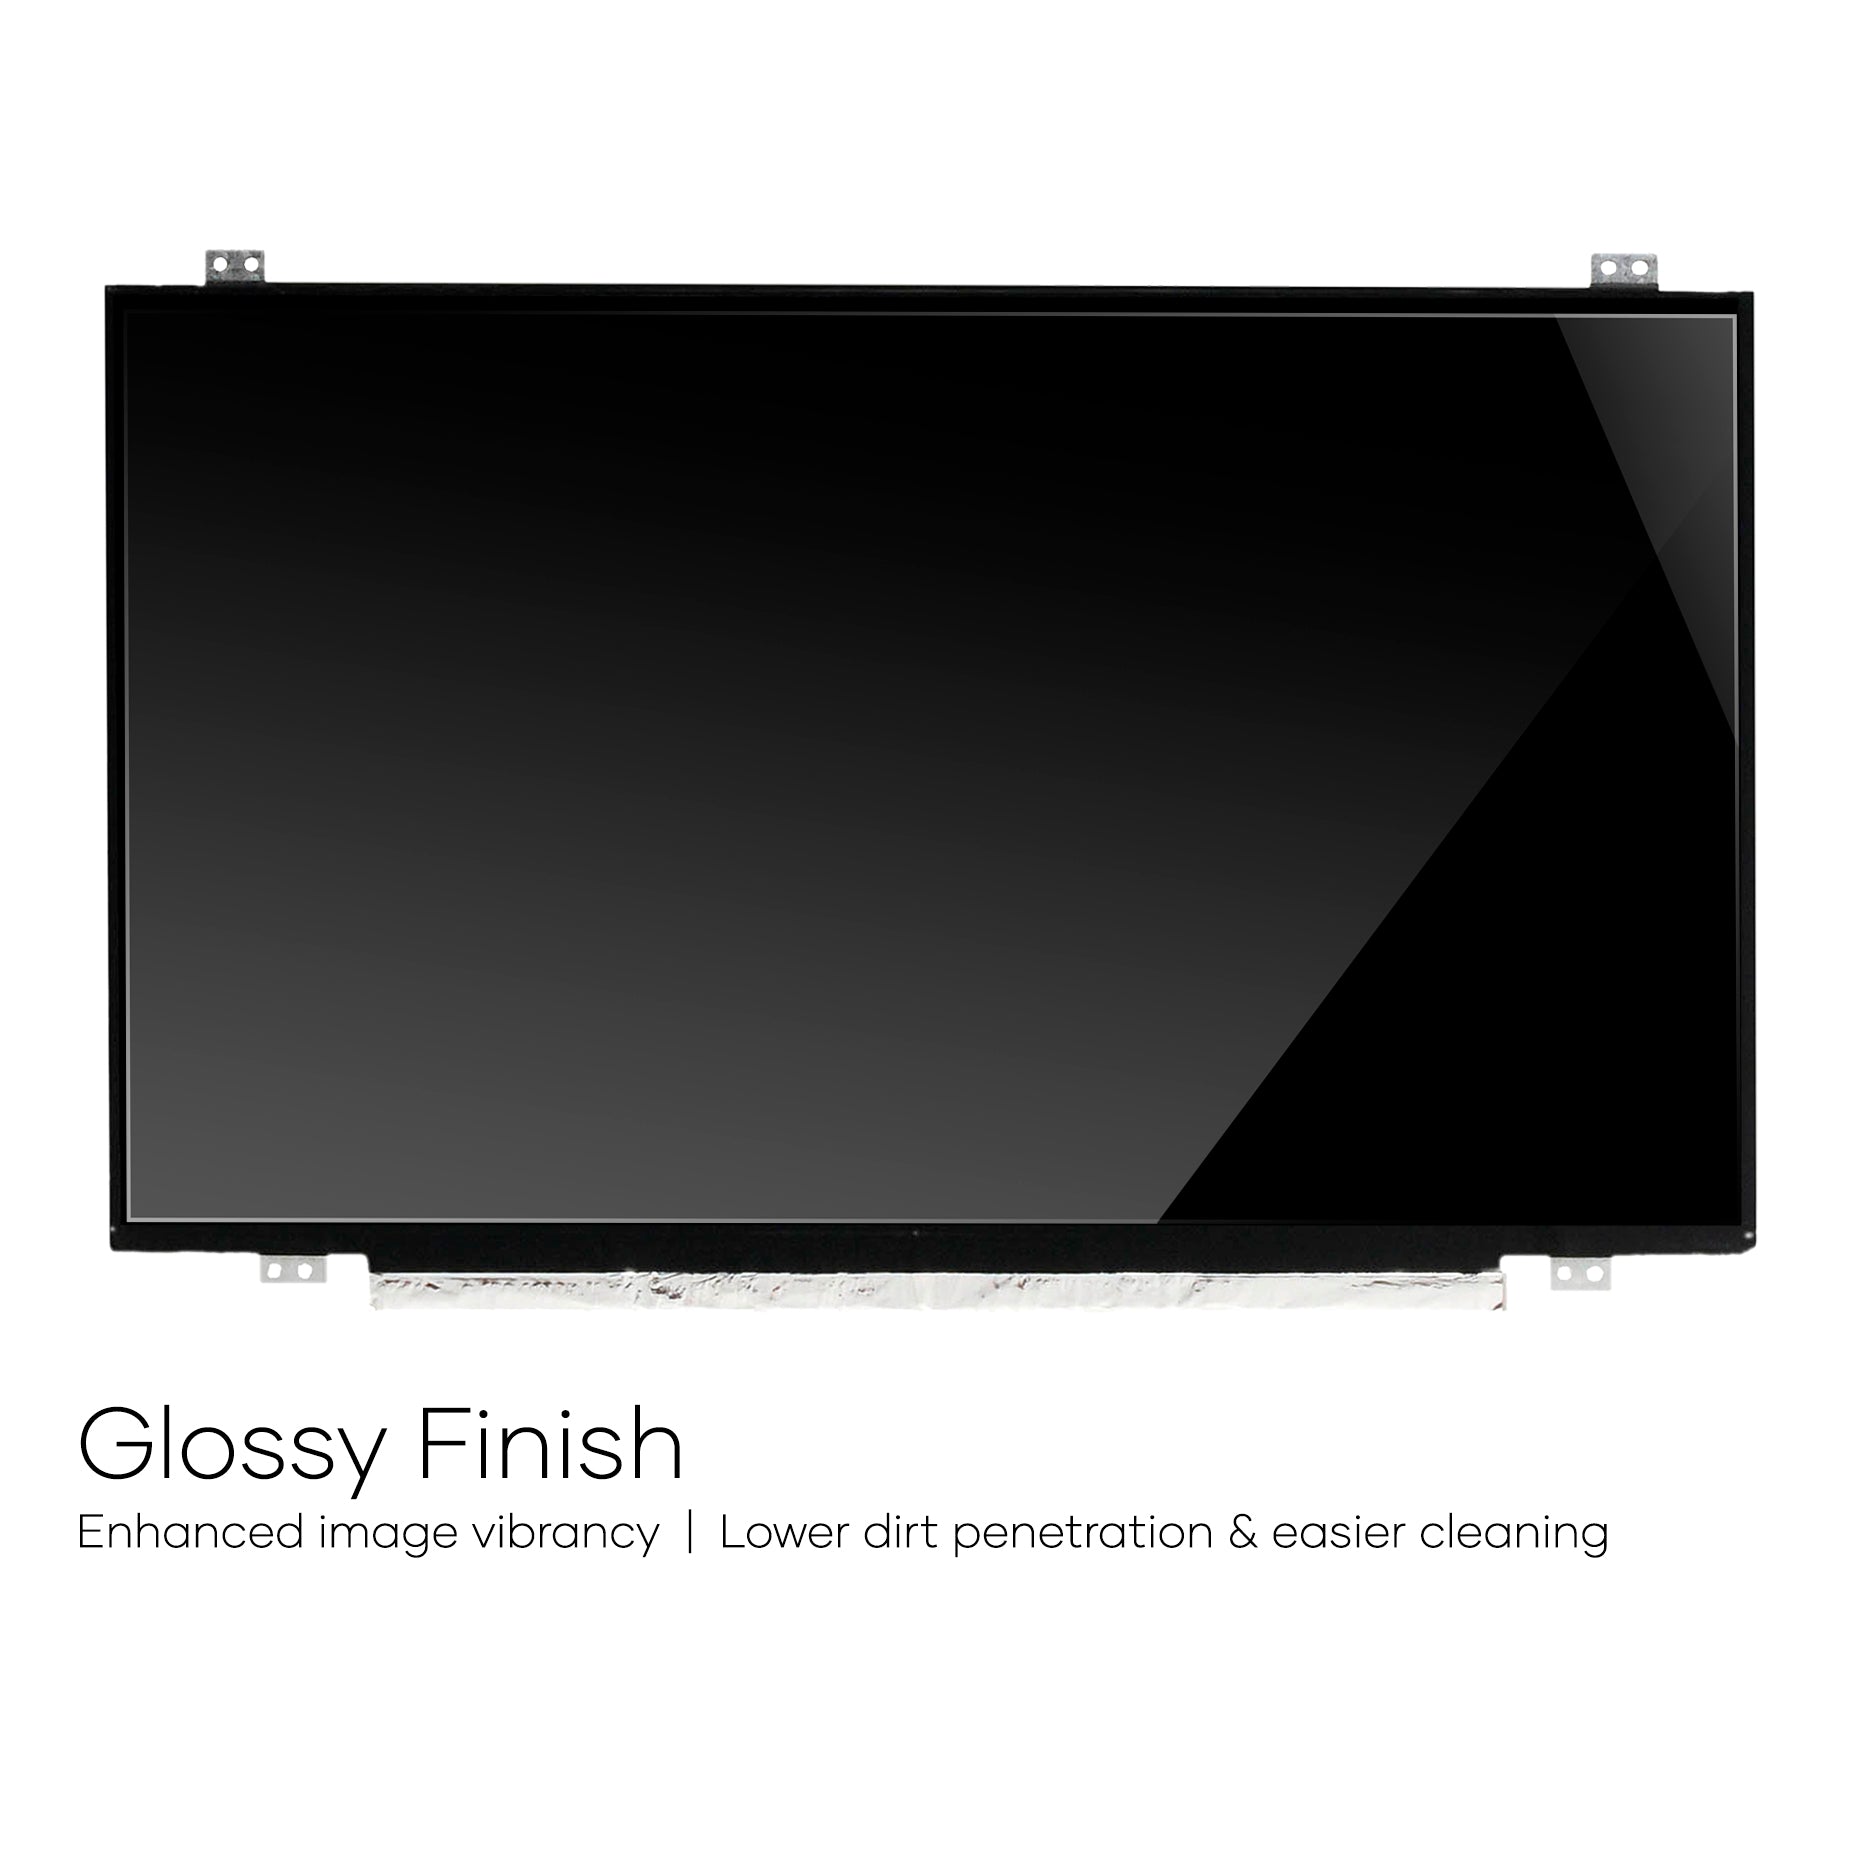 Screen Replacement for N140BGE-EA3 REV.B5 HD 1366x768 Glossy LCD LED Display